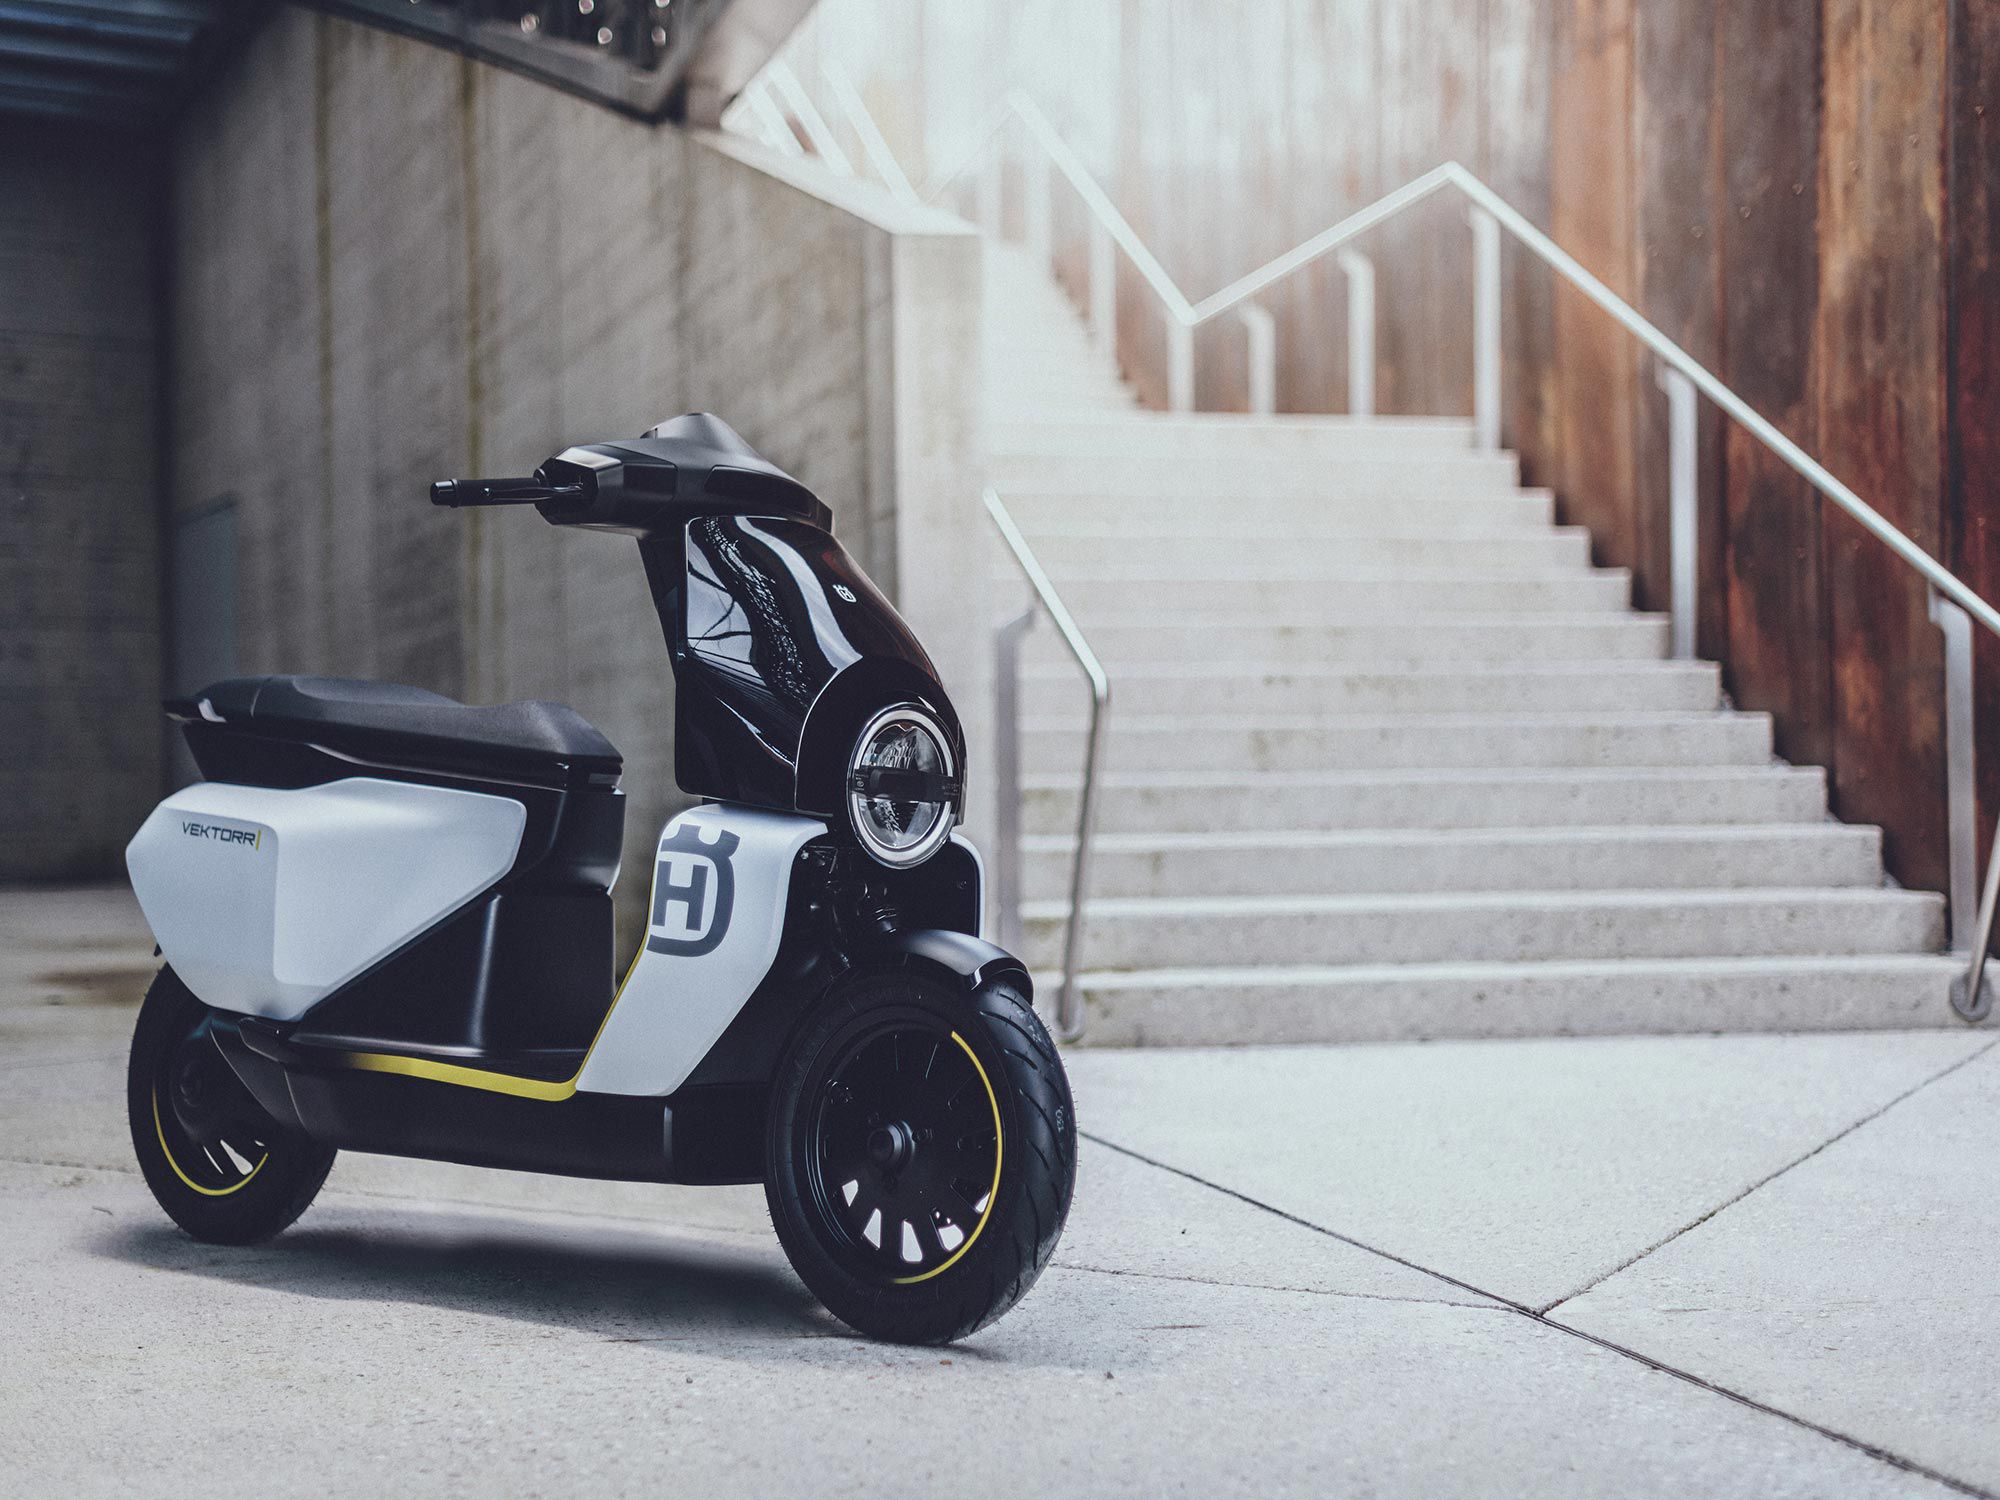 The Vektorr Concept joins Husqvarna’s growing emobility line.